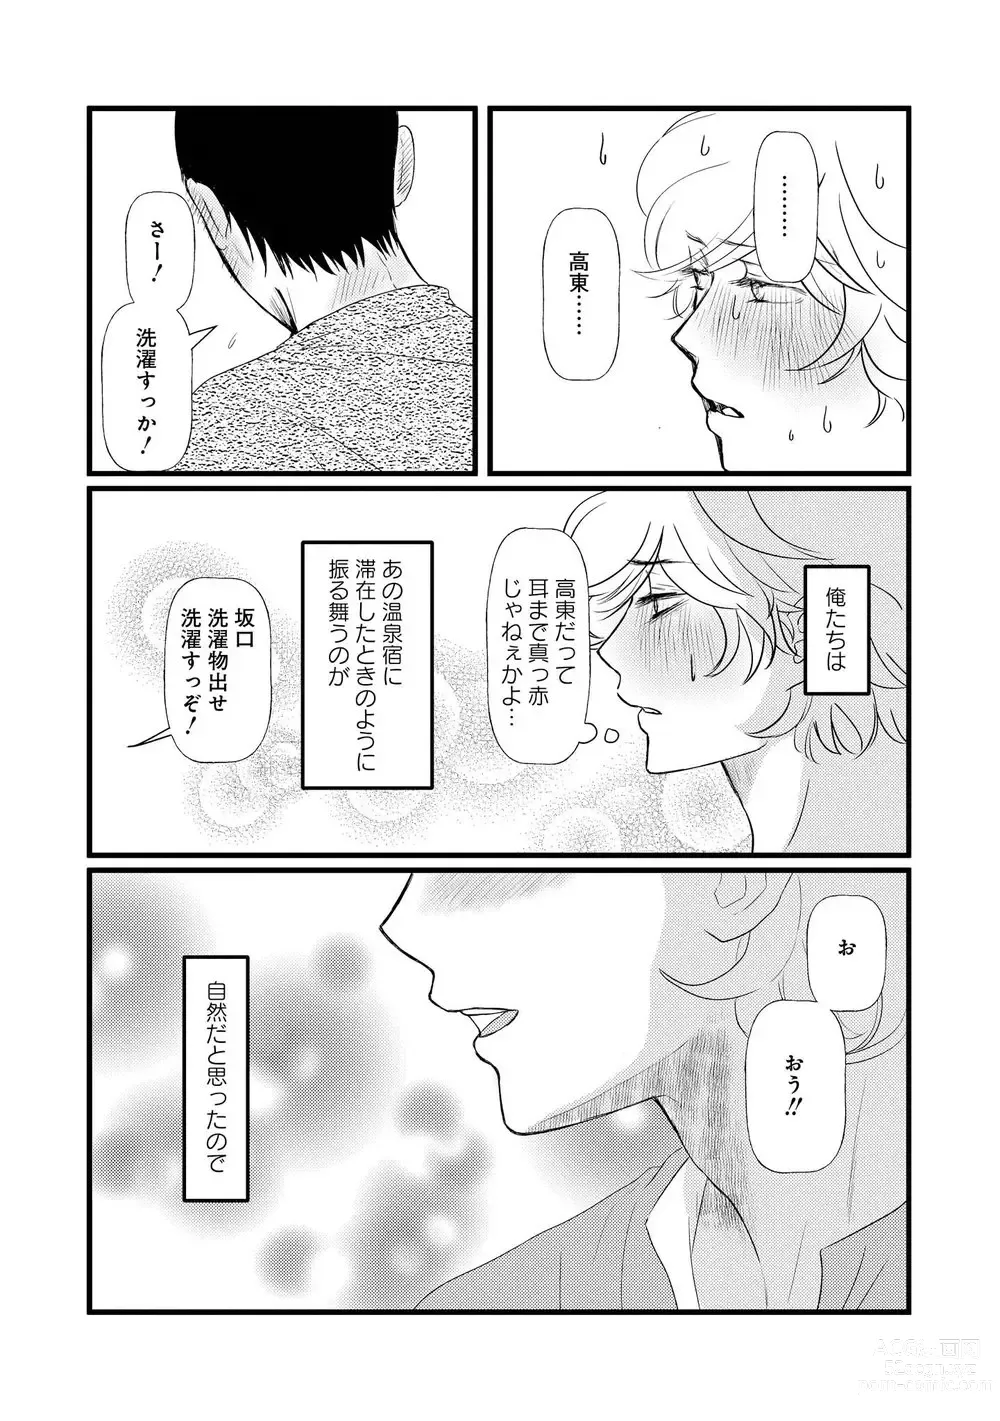 Page 147 of manga AHOERO